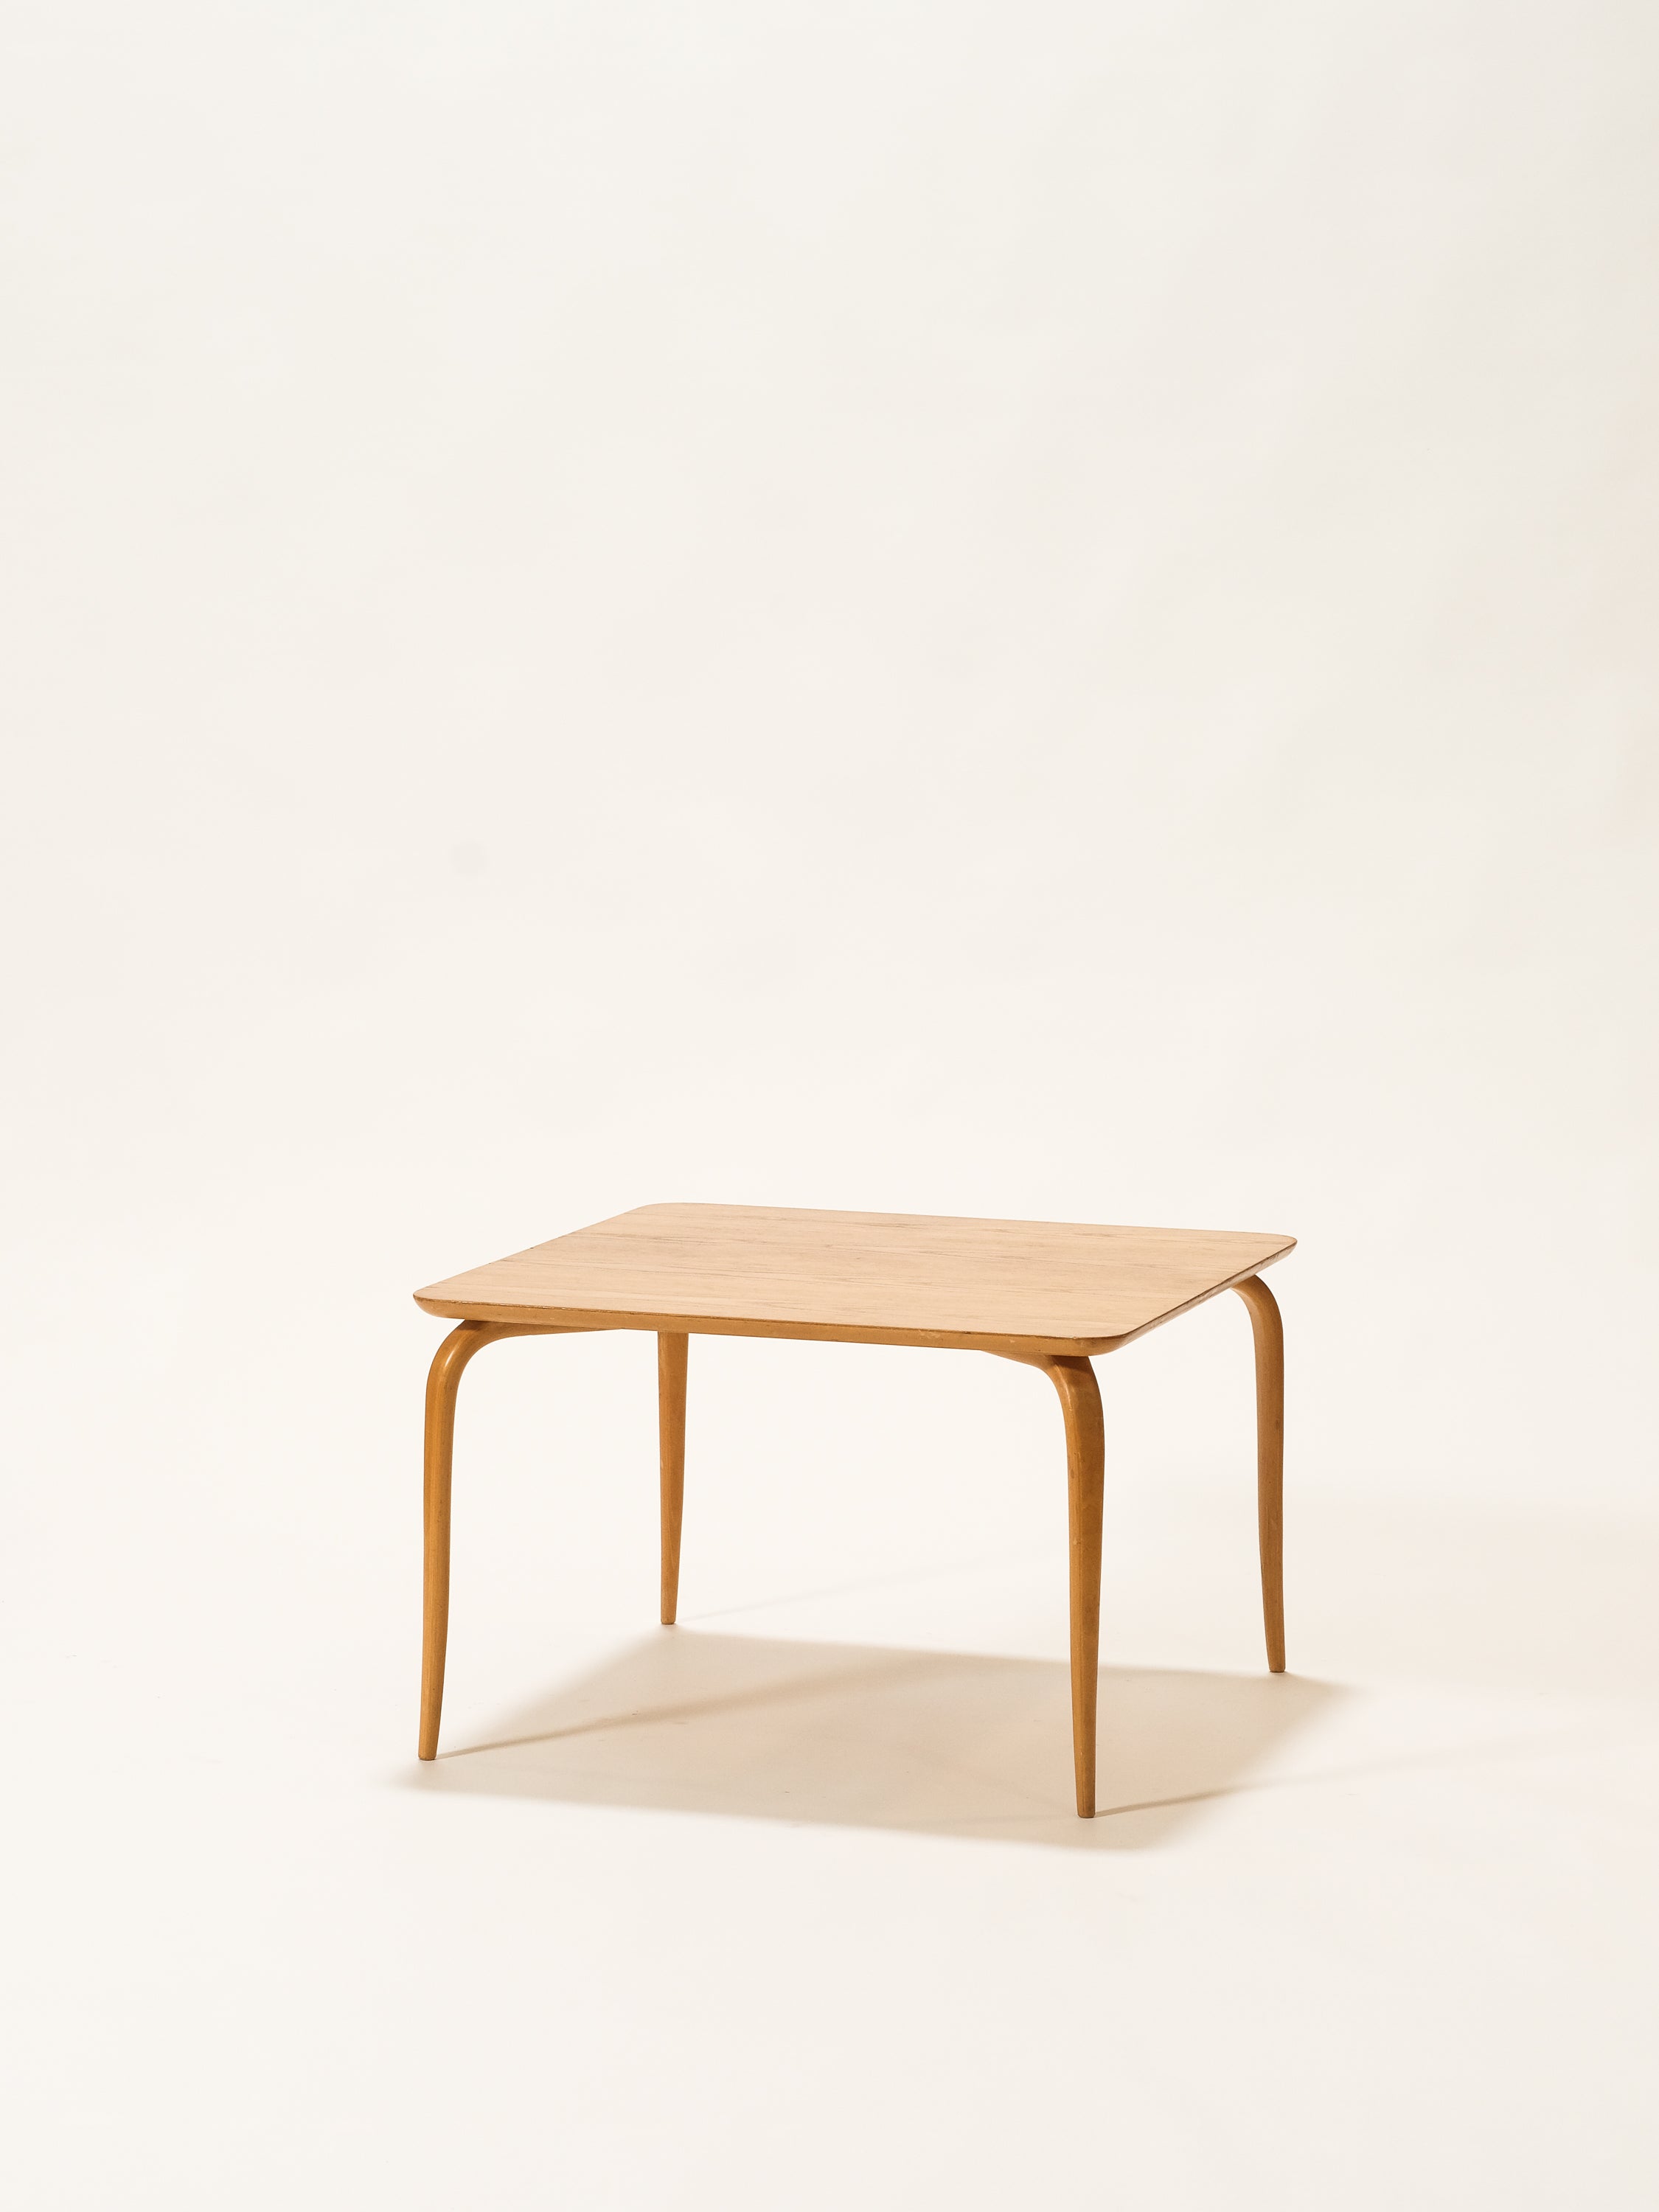 Model “Annika” Coffee Table by Bruno Mathsson for Karl Mathsson, Sweden, 1970’s